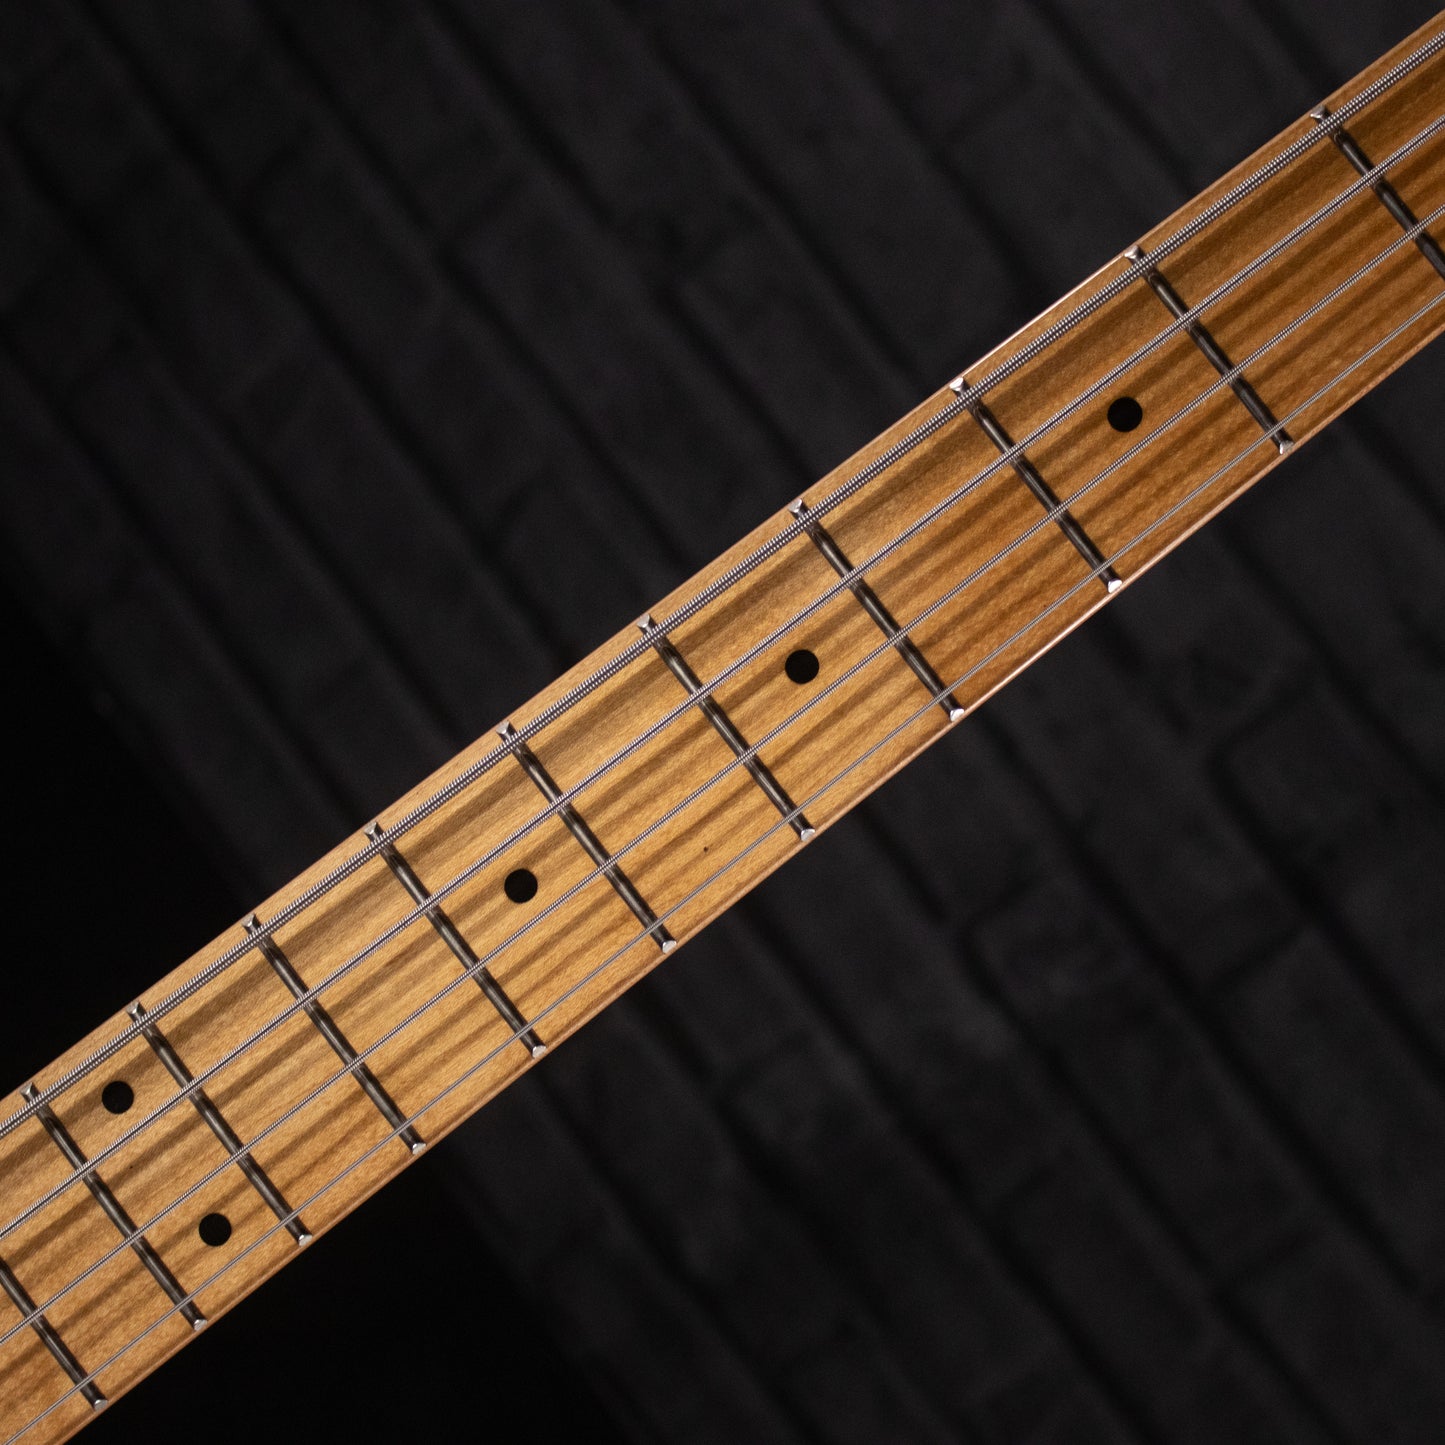 Tagima TW-73 4-String Electric Bass Guitar (Black)